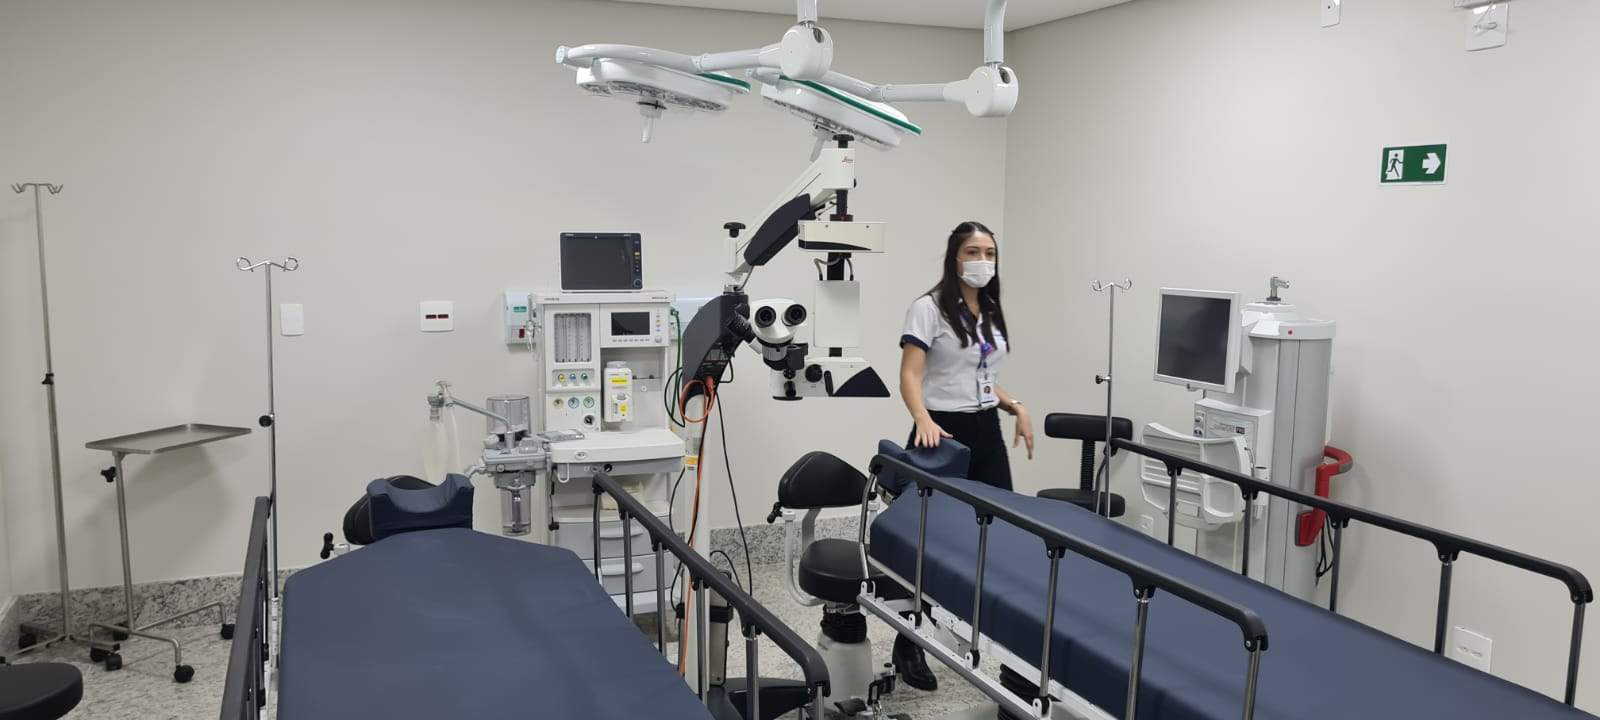 UNIFACIG Hospital VISION Manhuaçu